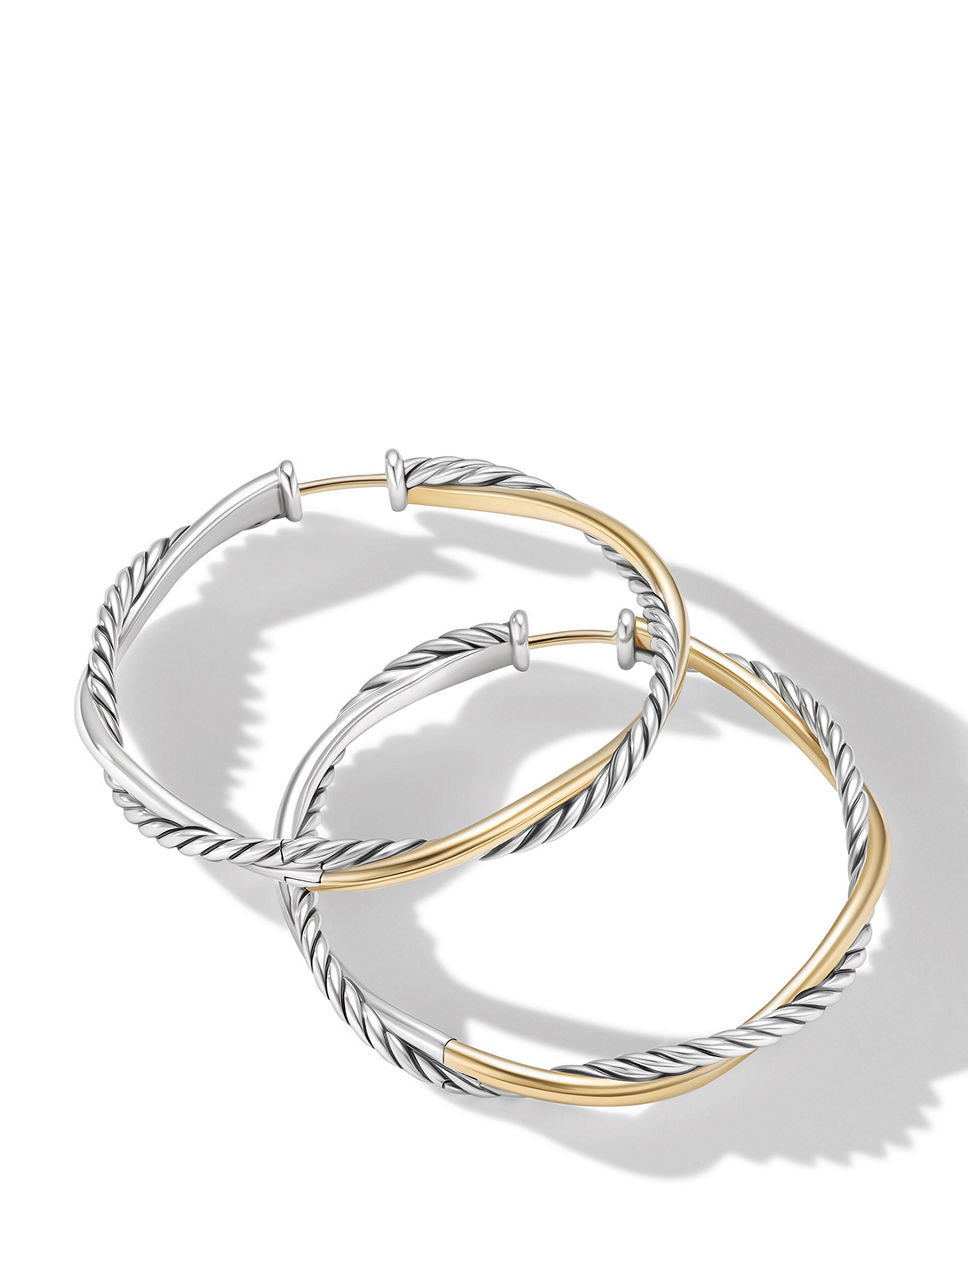 Petite Infinity Hoop Earrings In Sterling Silver With 14k Yellow Gold